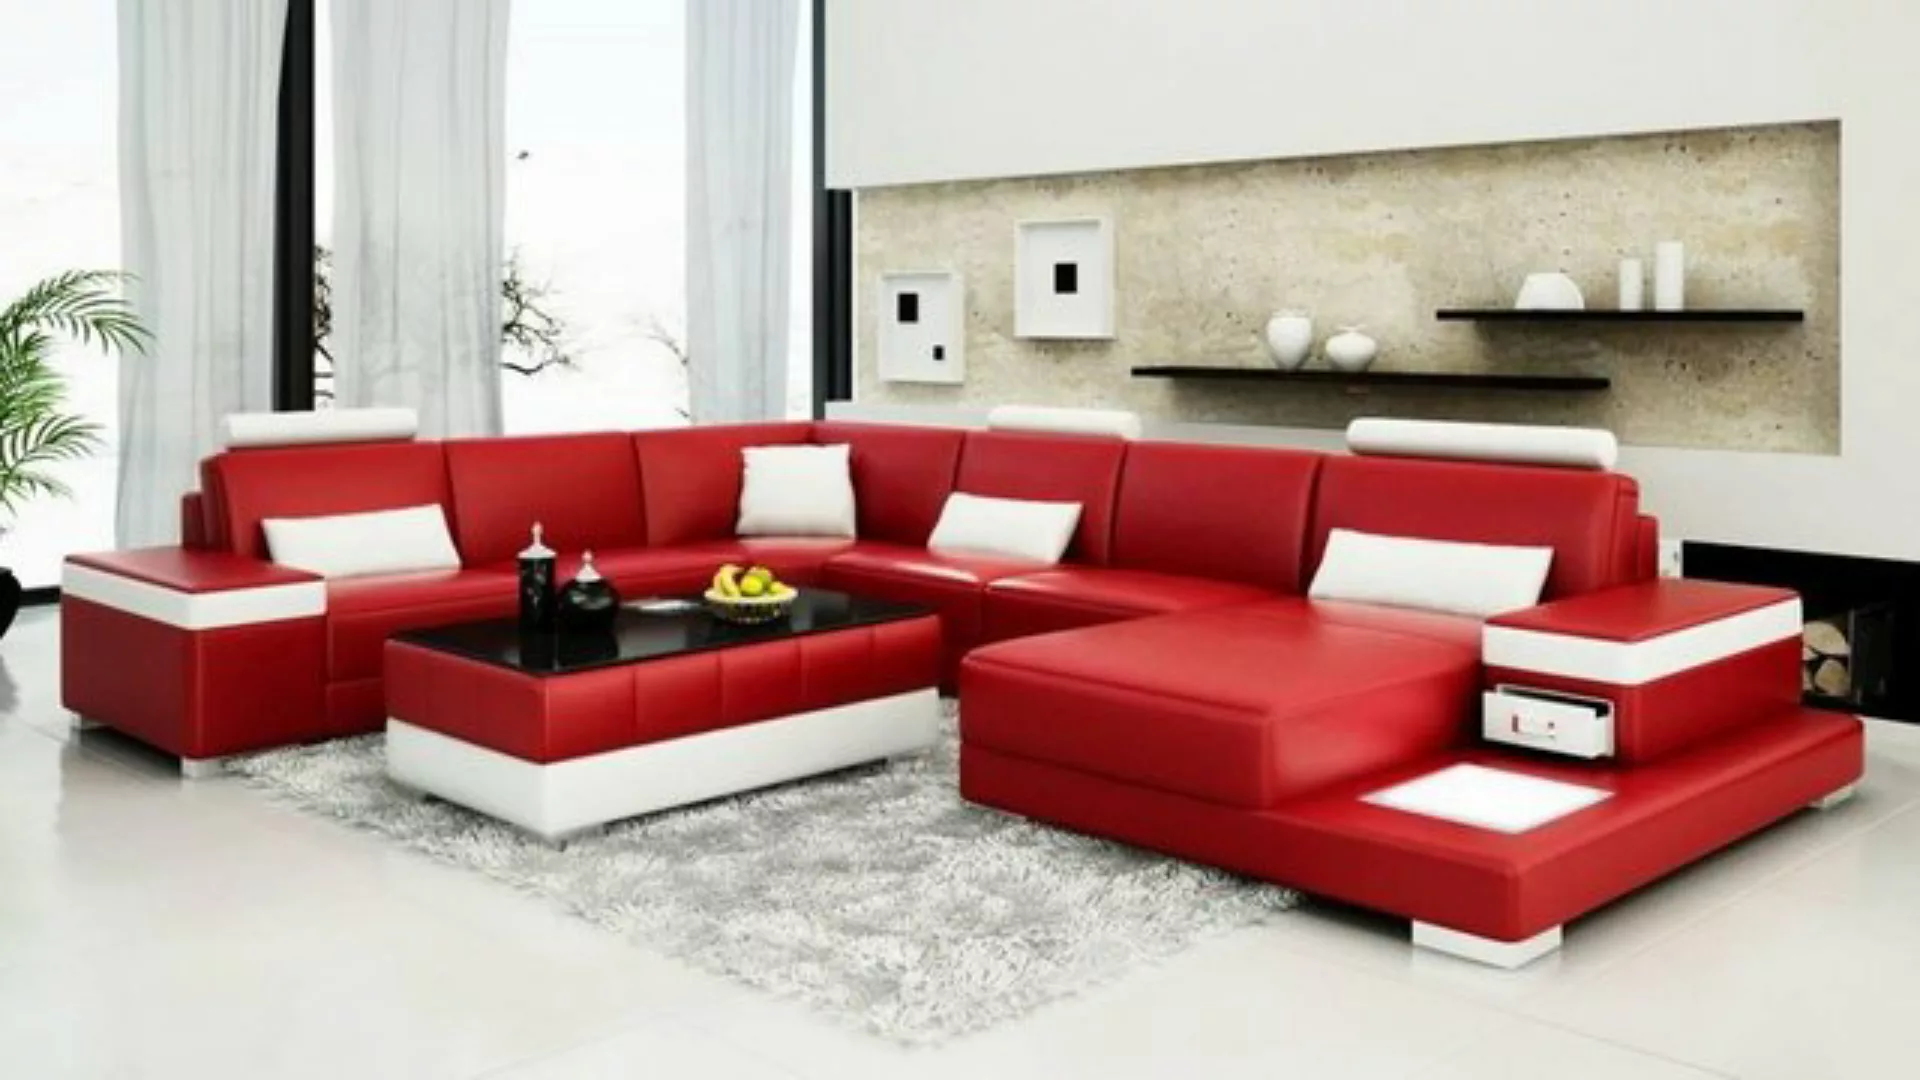 JVmoebel Ecksofa, Ledersofa Designer Sofa U Form Wohnlandschaft Couch Polst günstig online kaufen